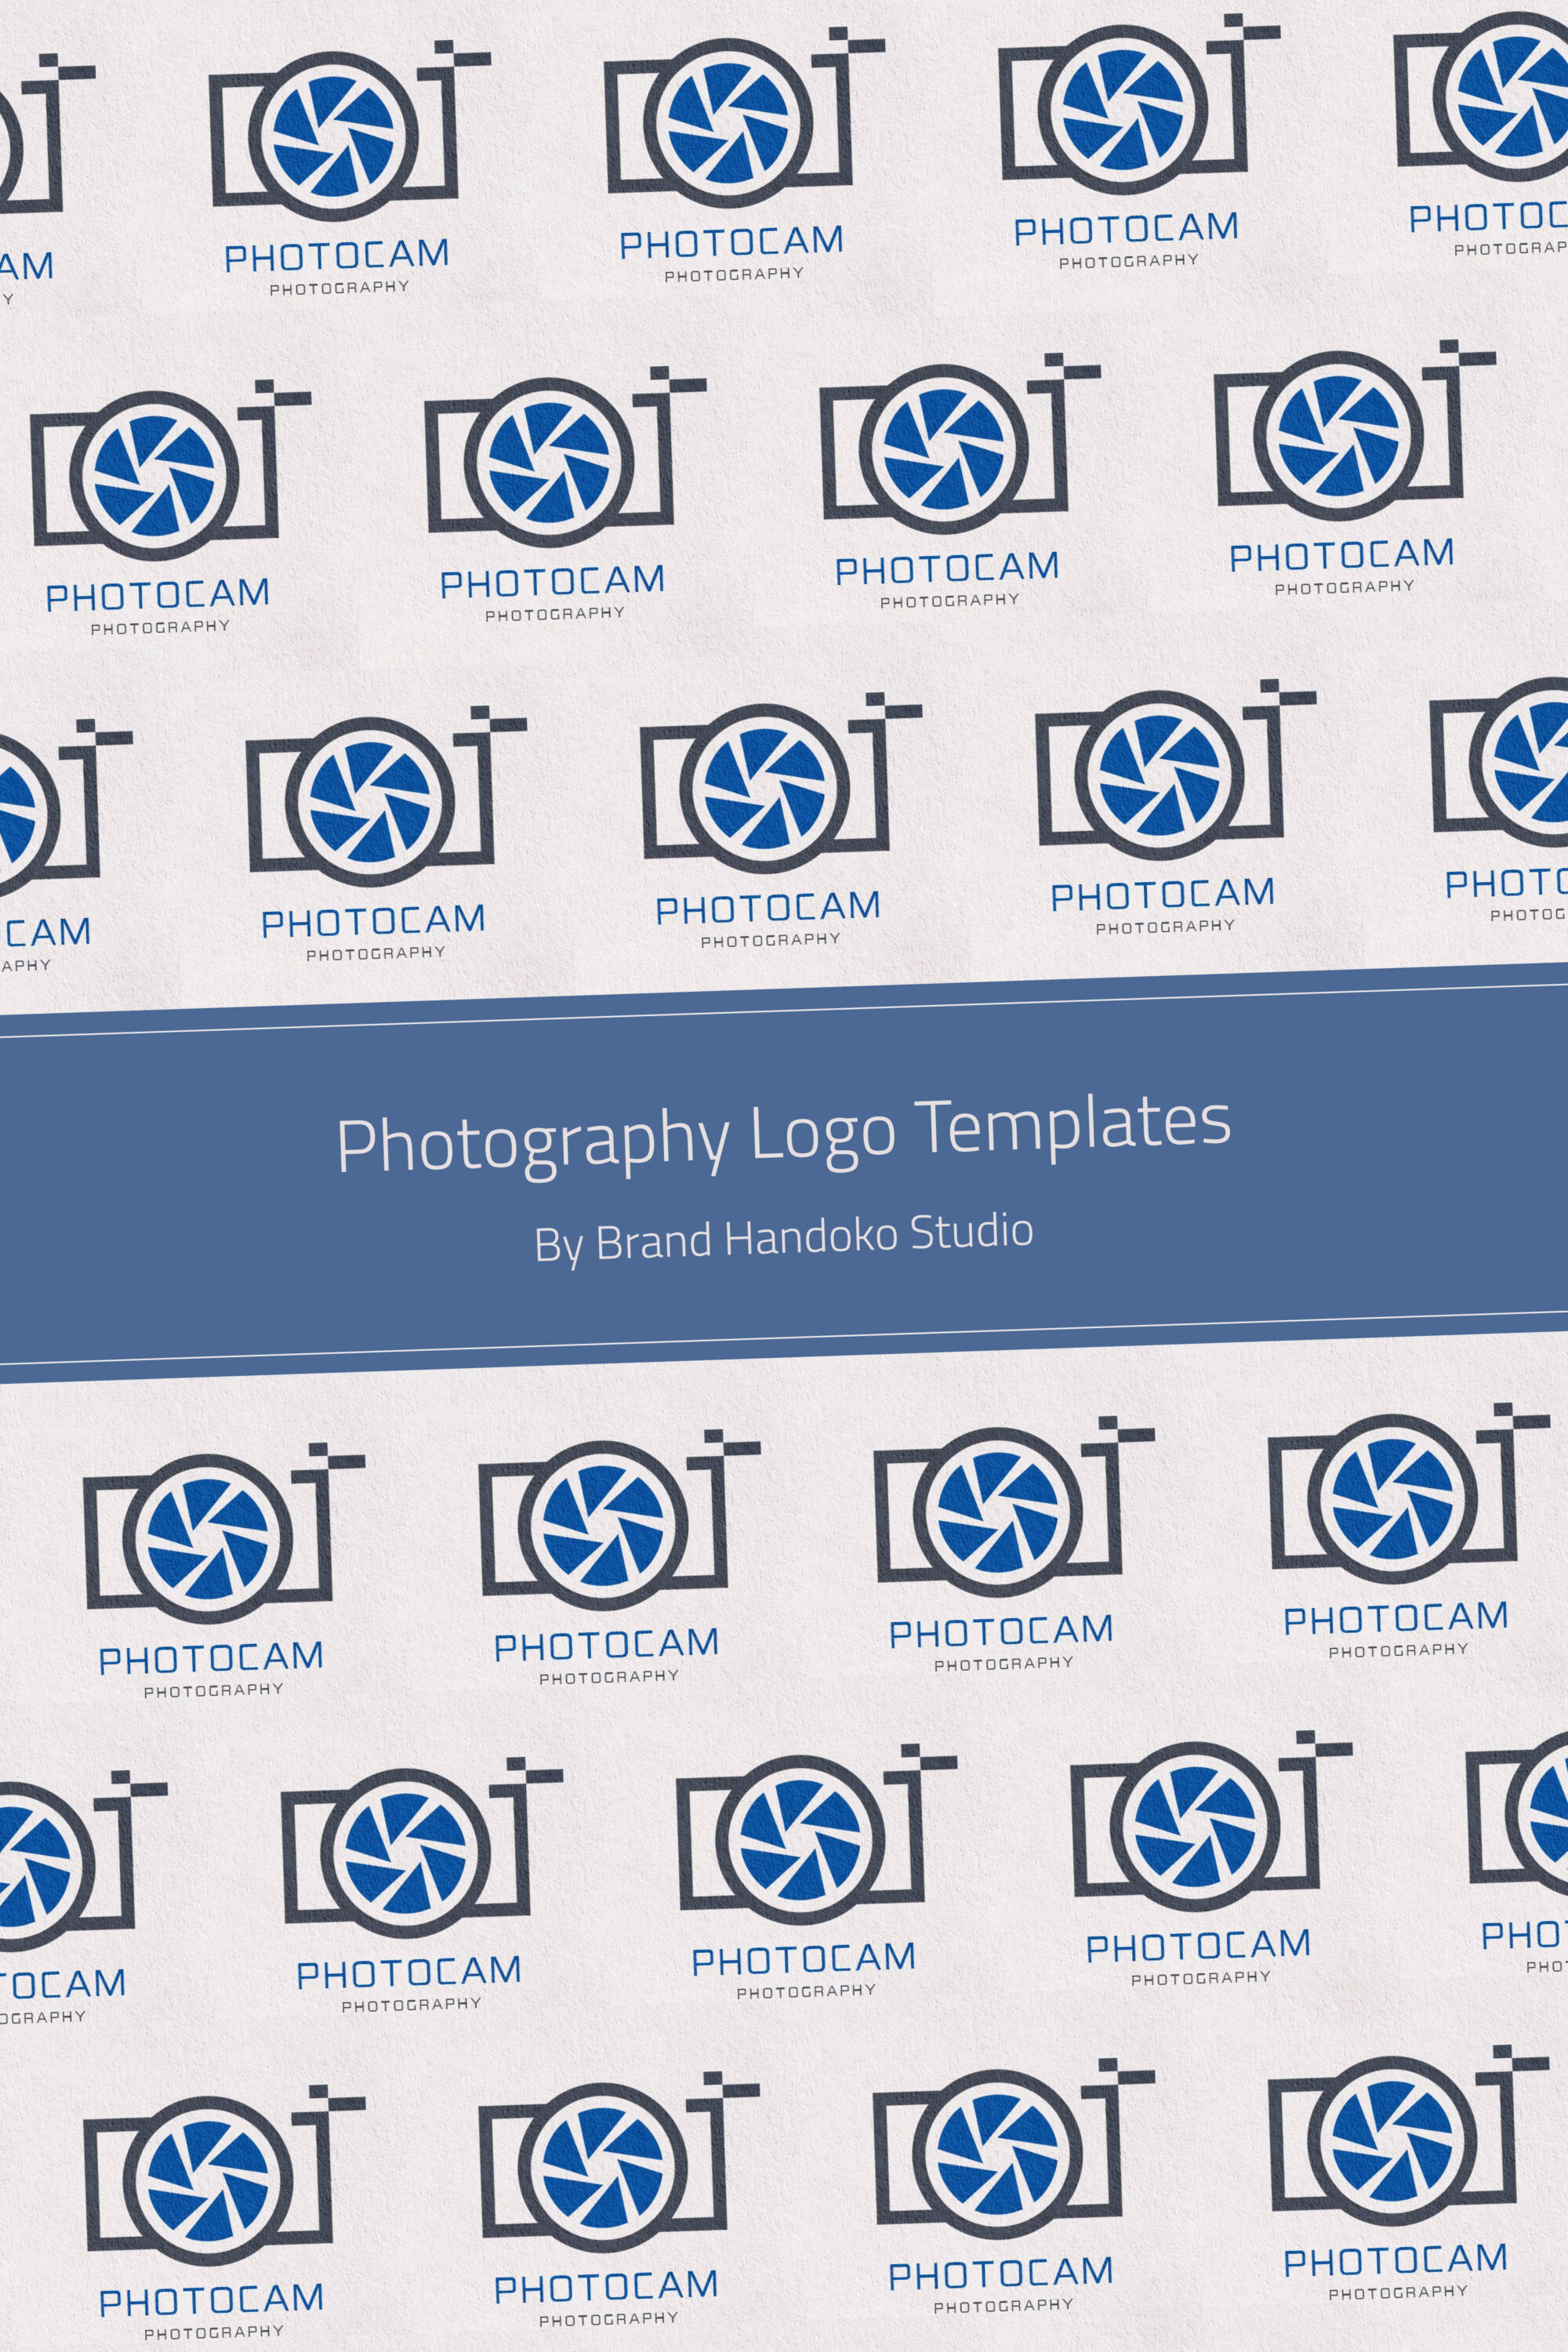 photography logo templates 03 170